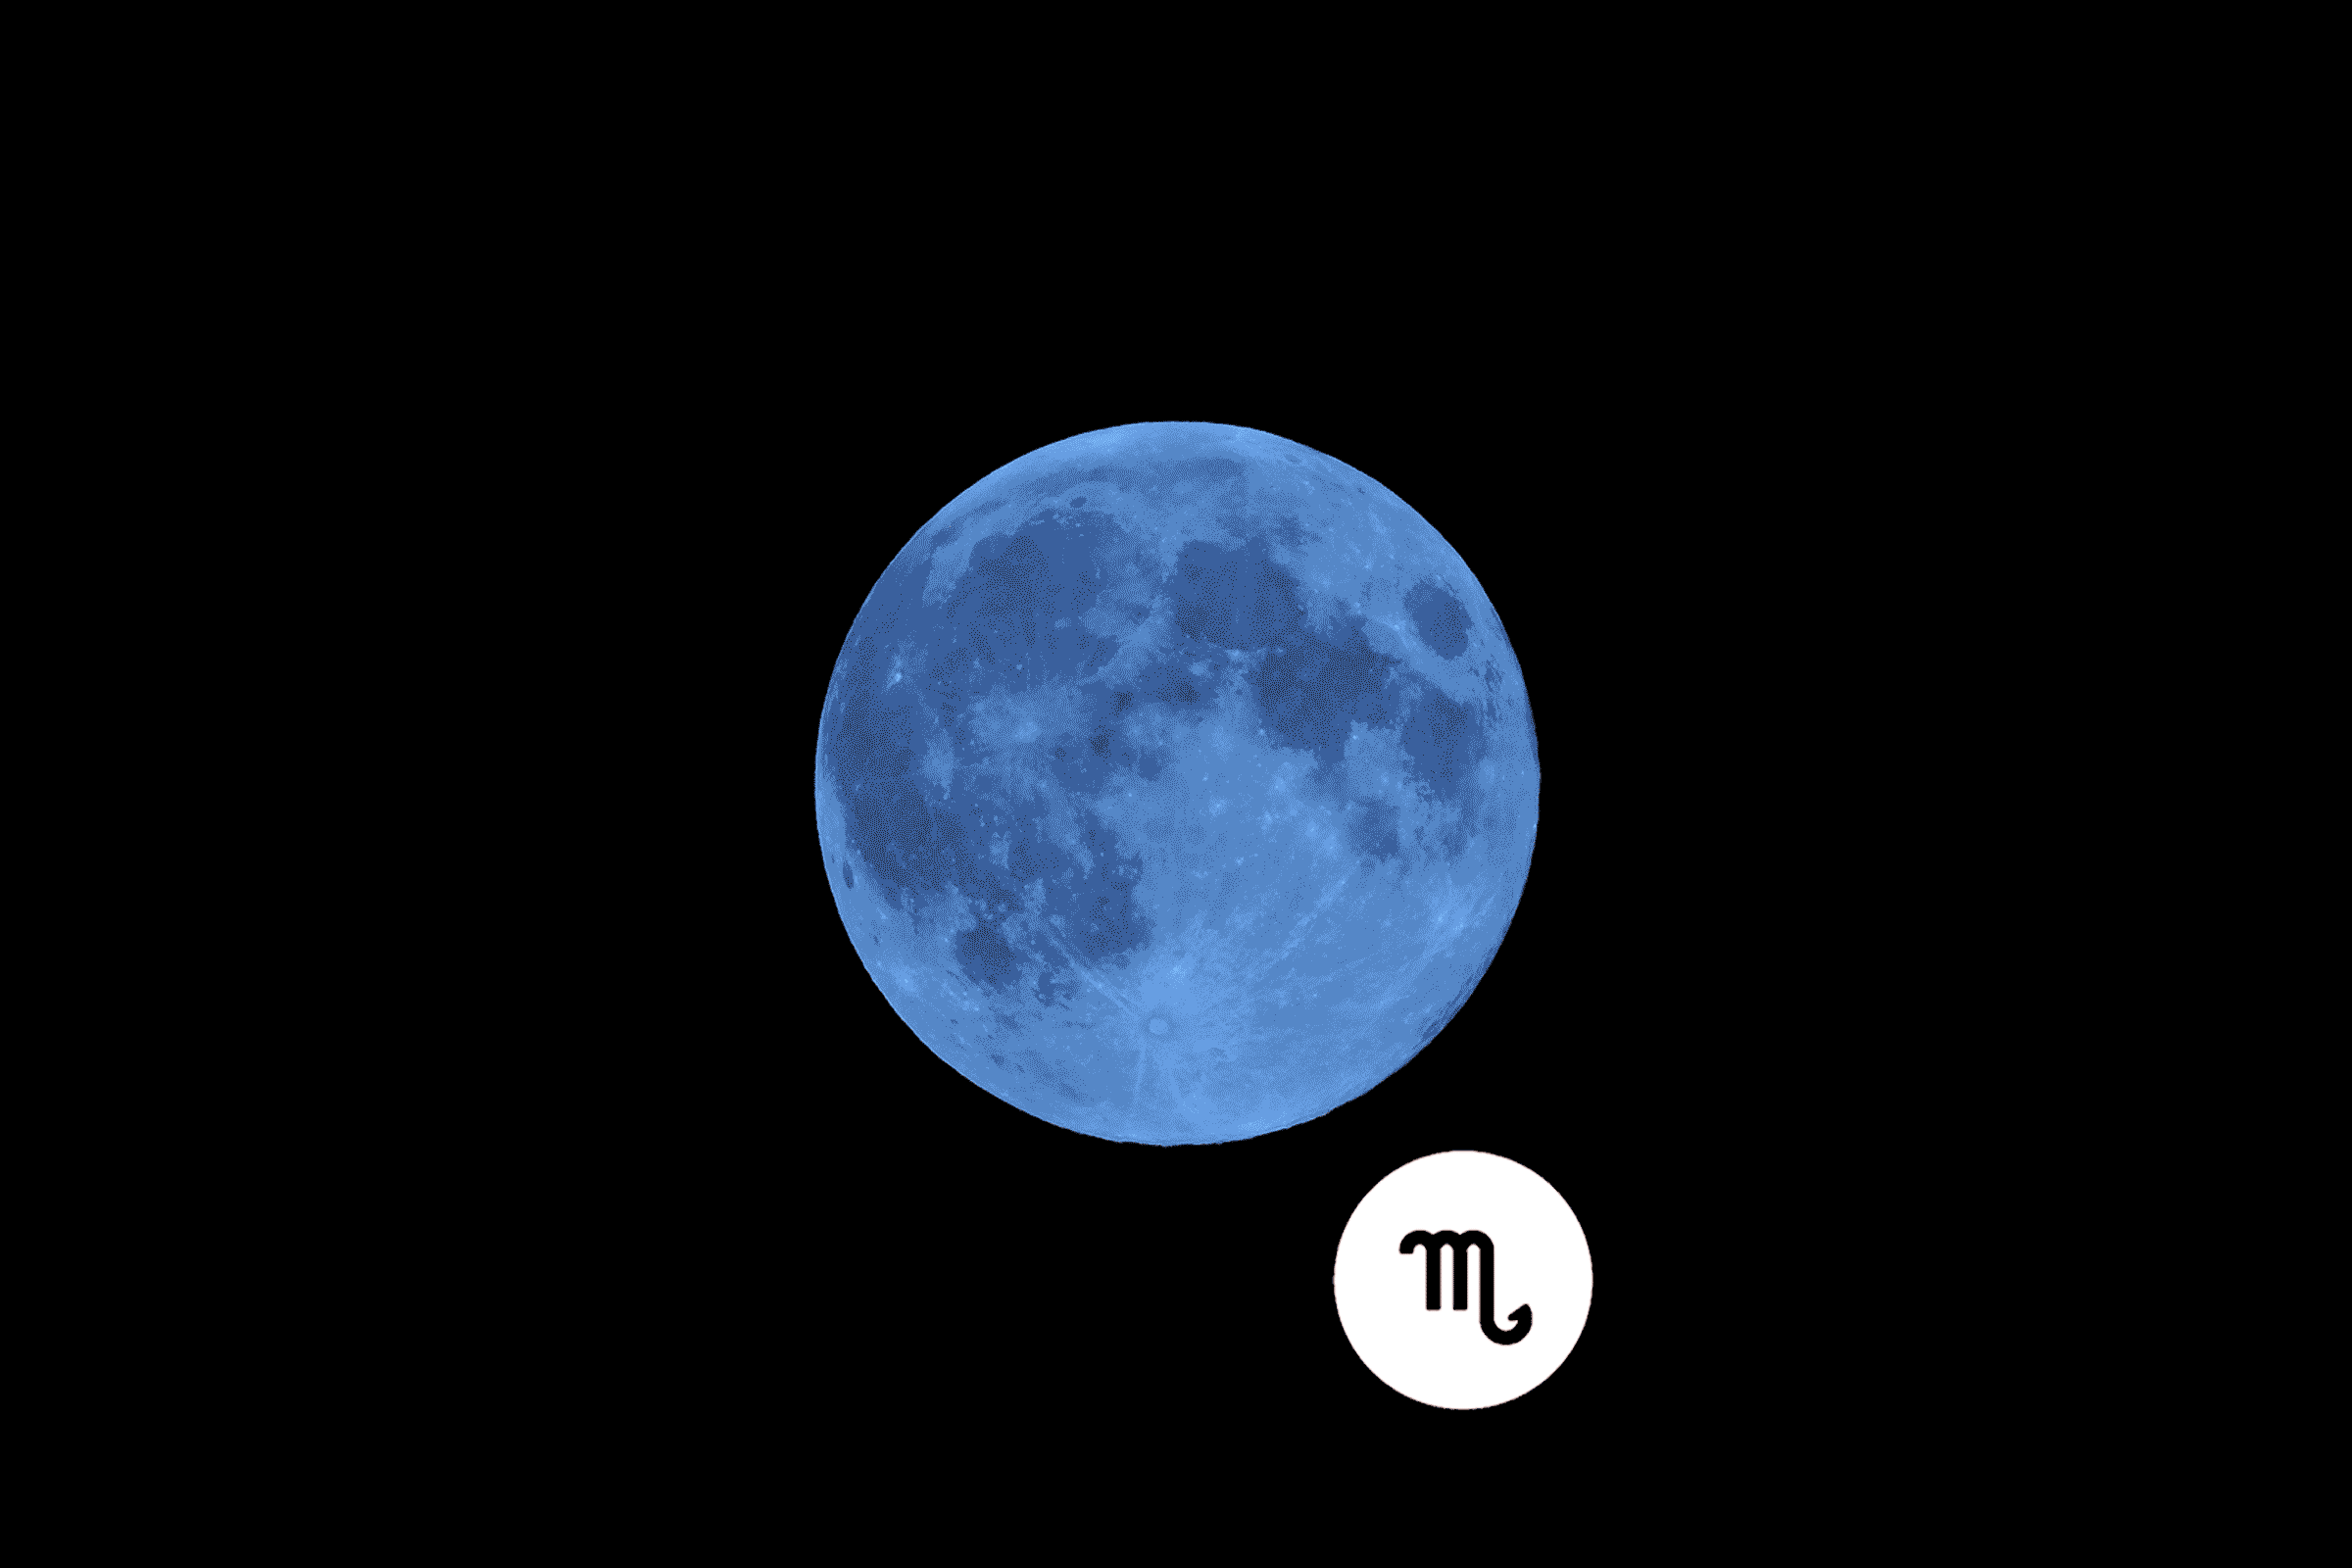 Zodiac symbols circle around blue moon in animated gif